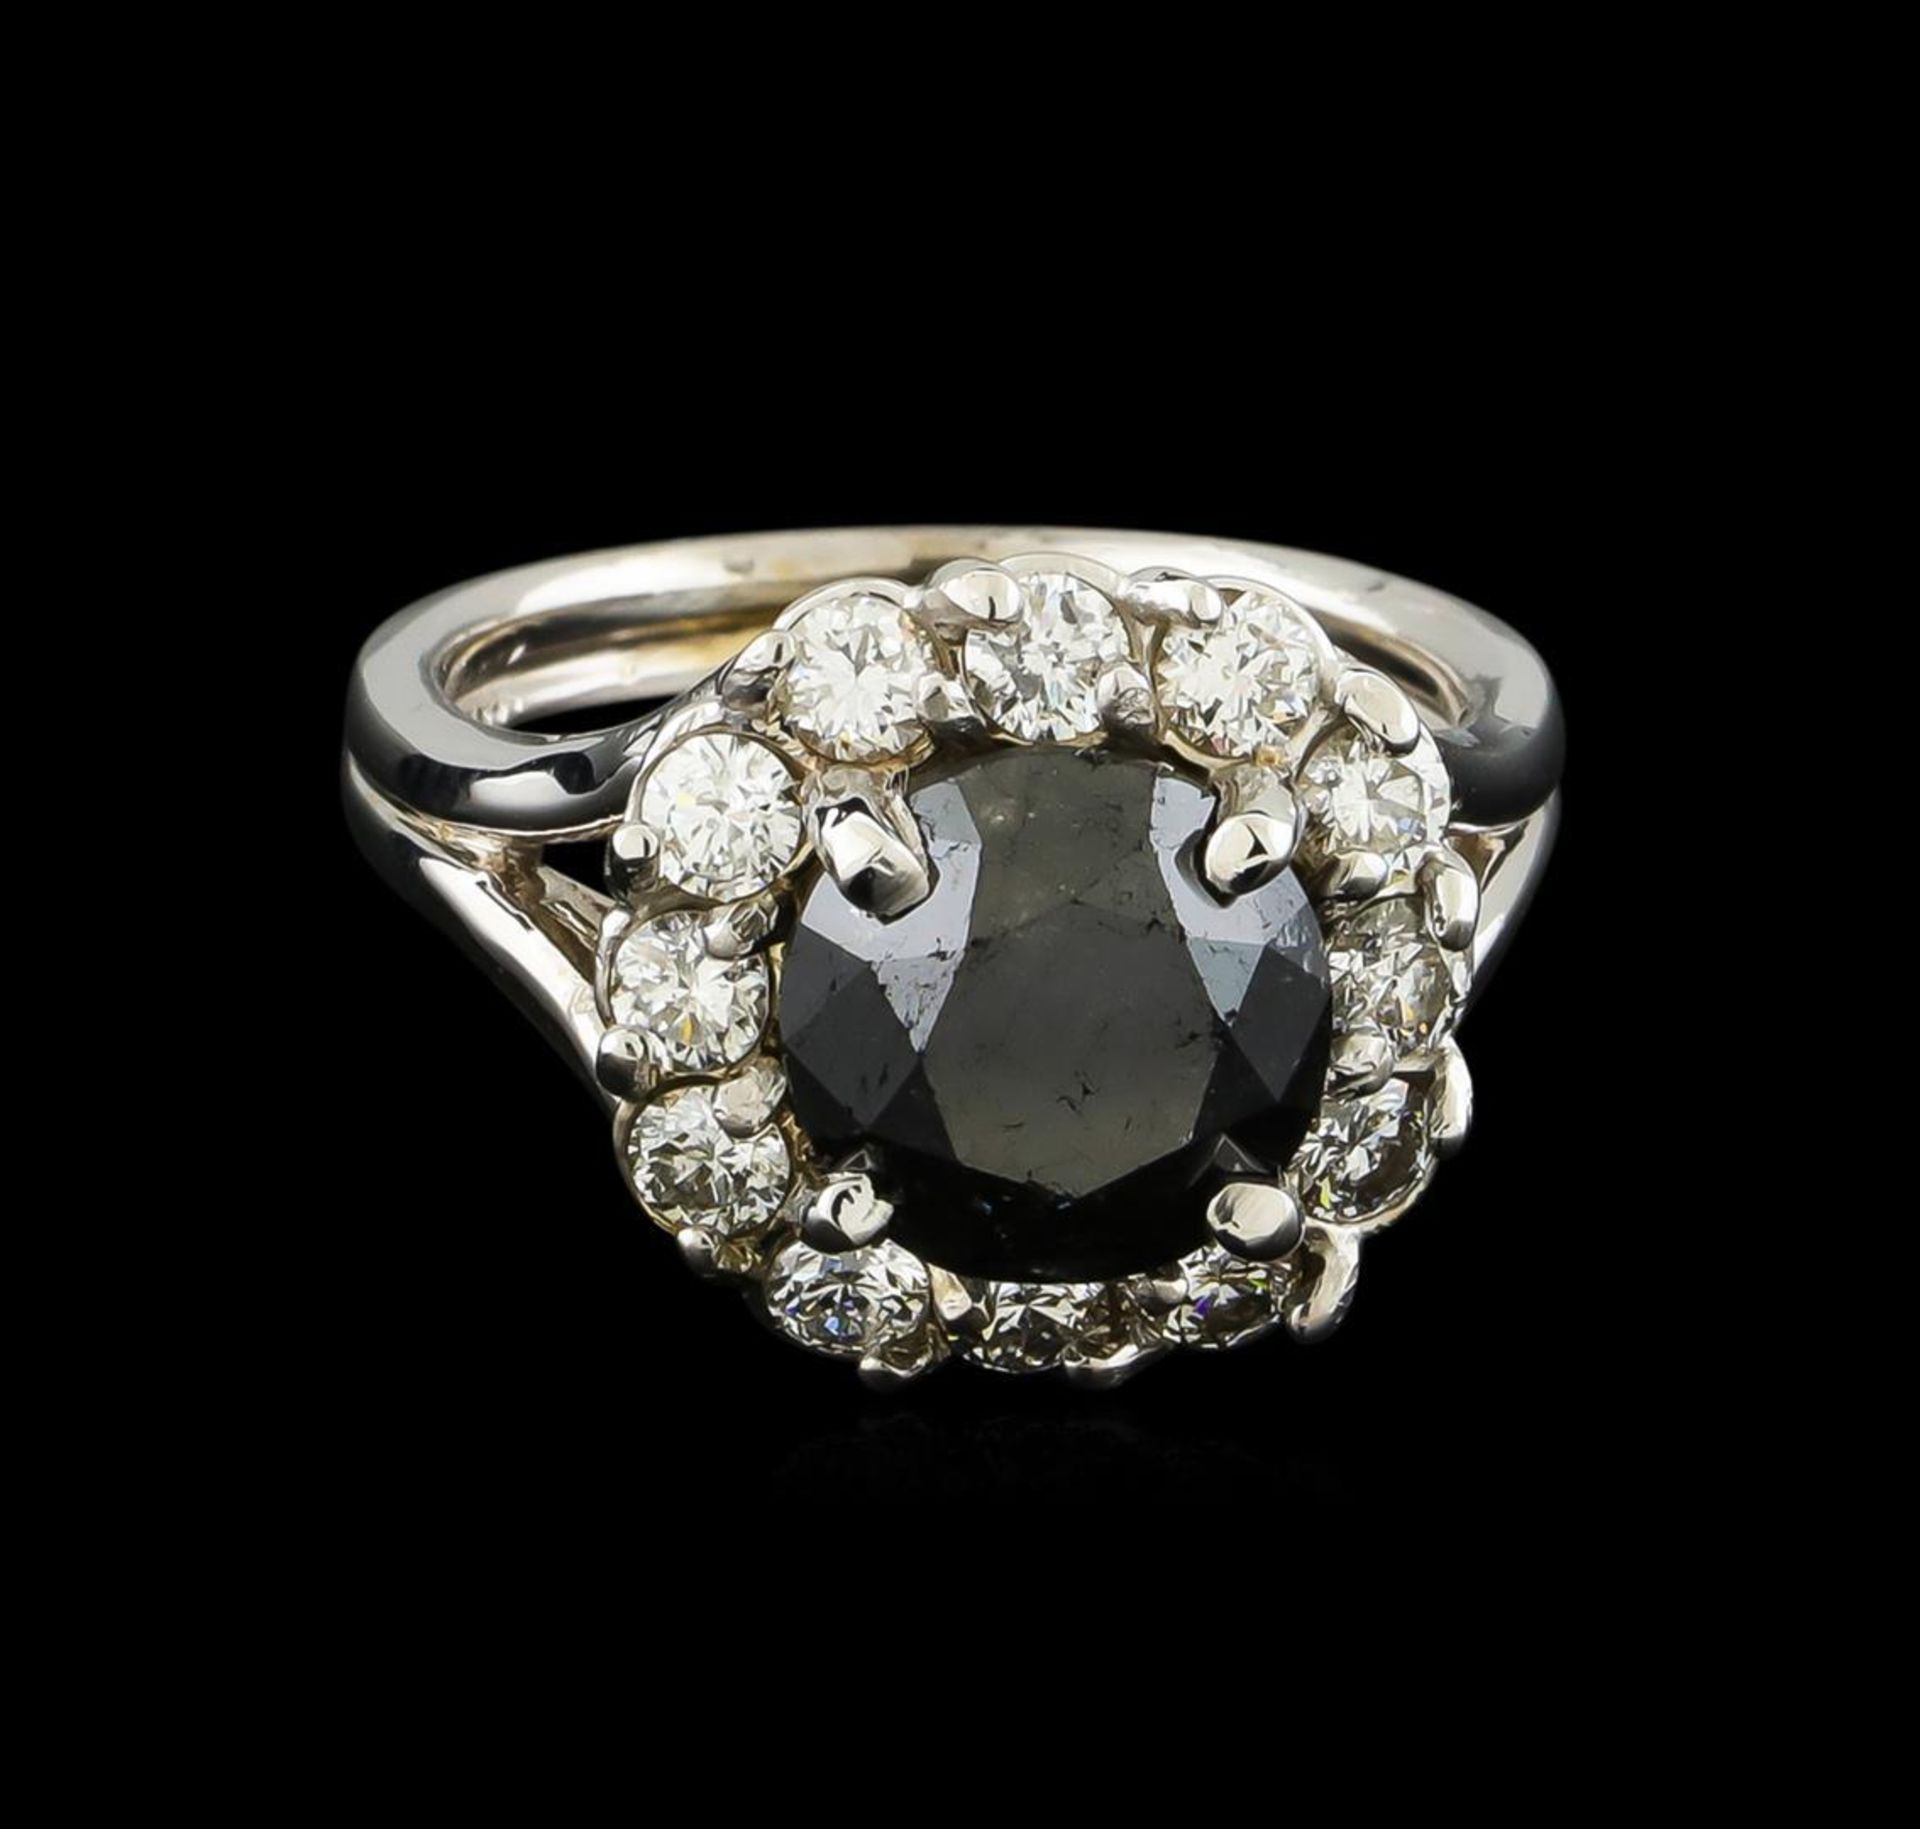 4.42 ctw Black Diamond Ring - 14KT White Gold - Image 2 of 5